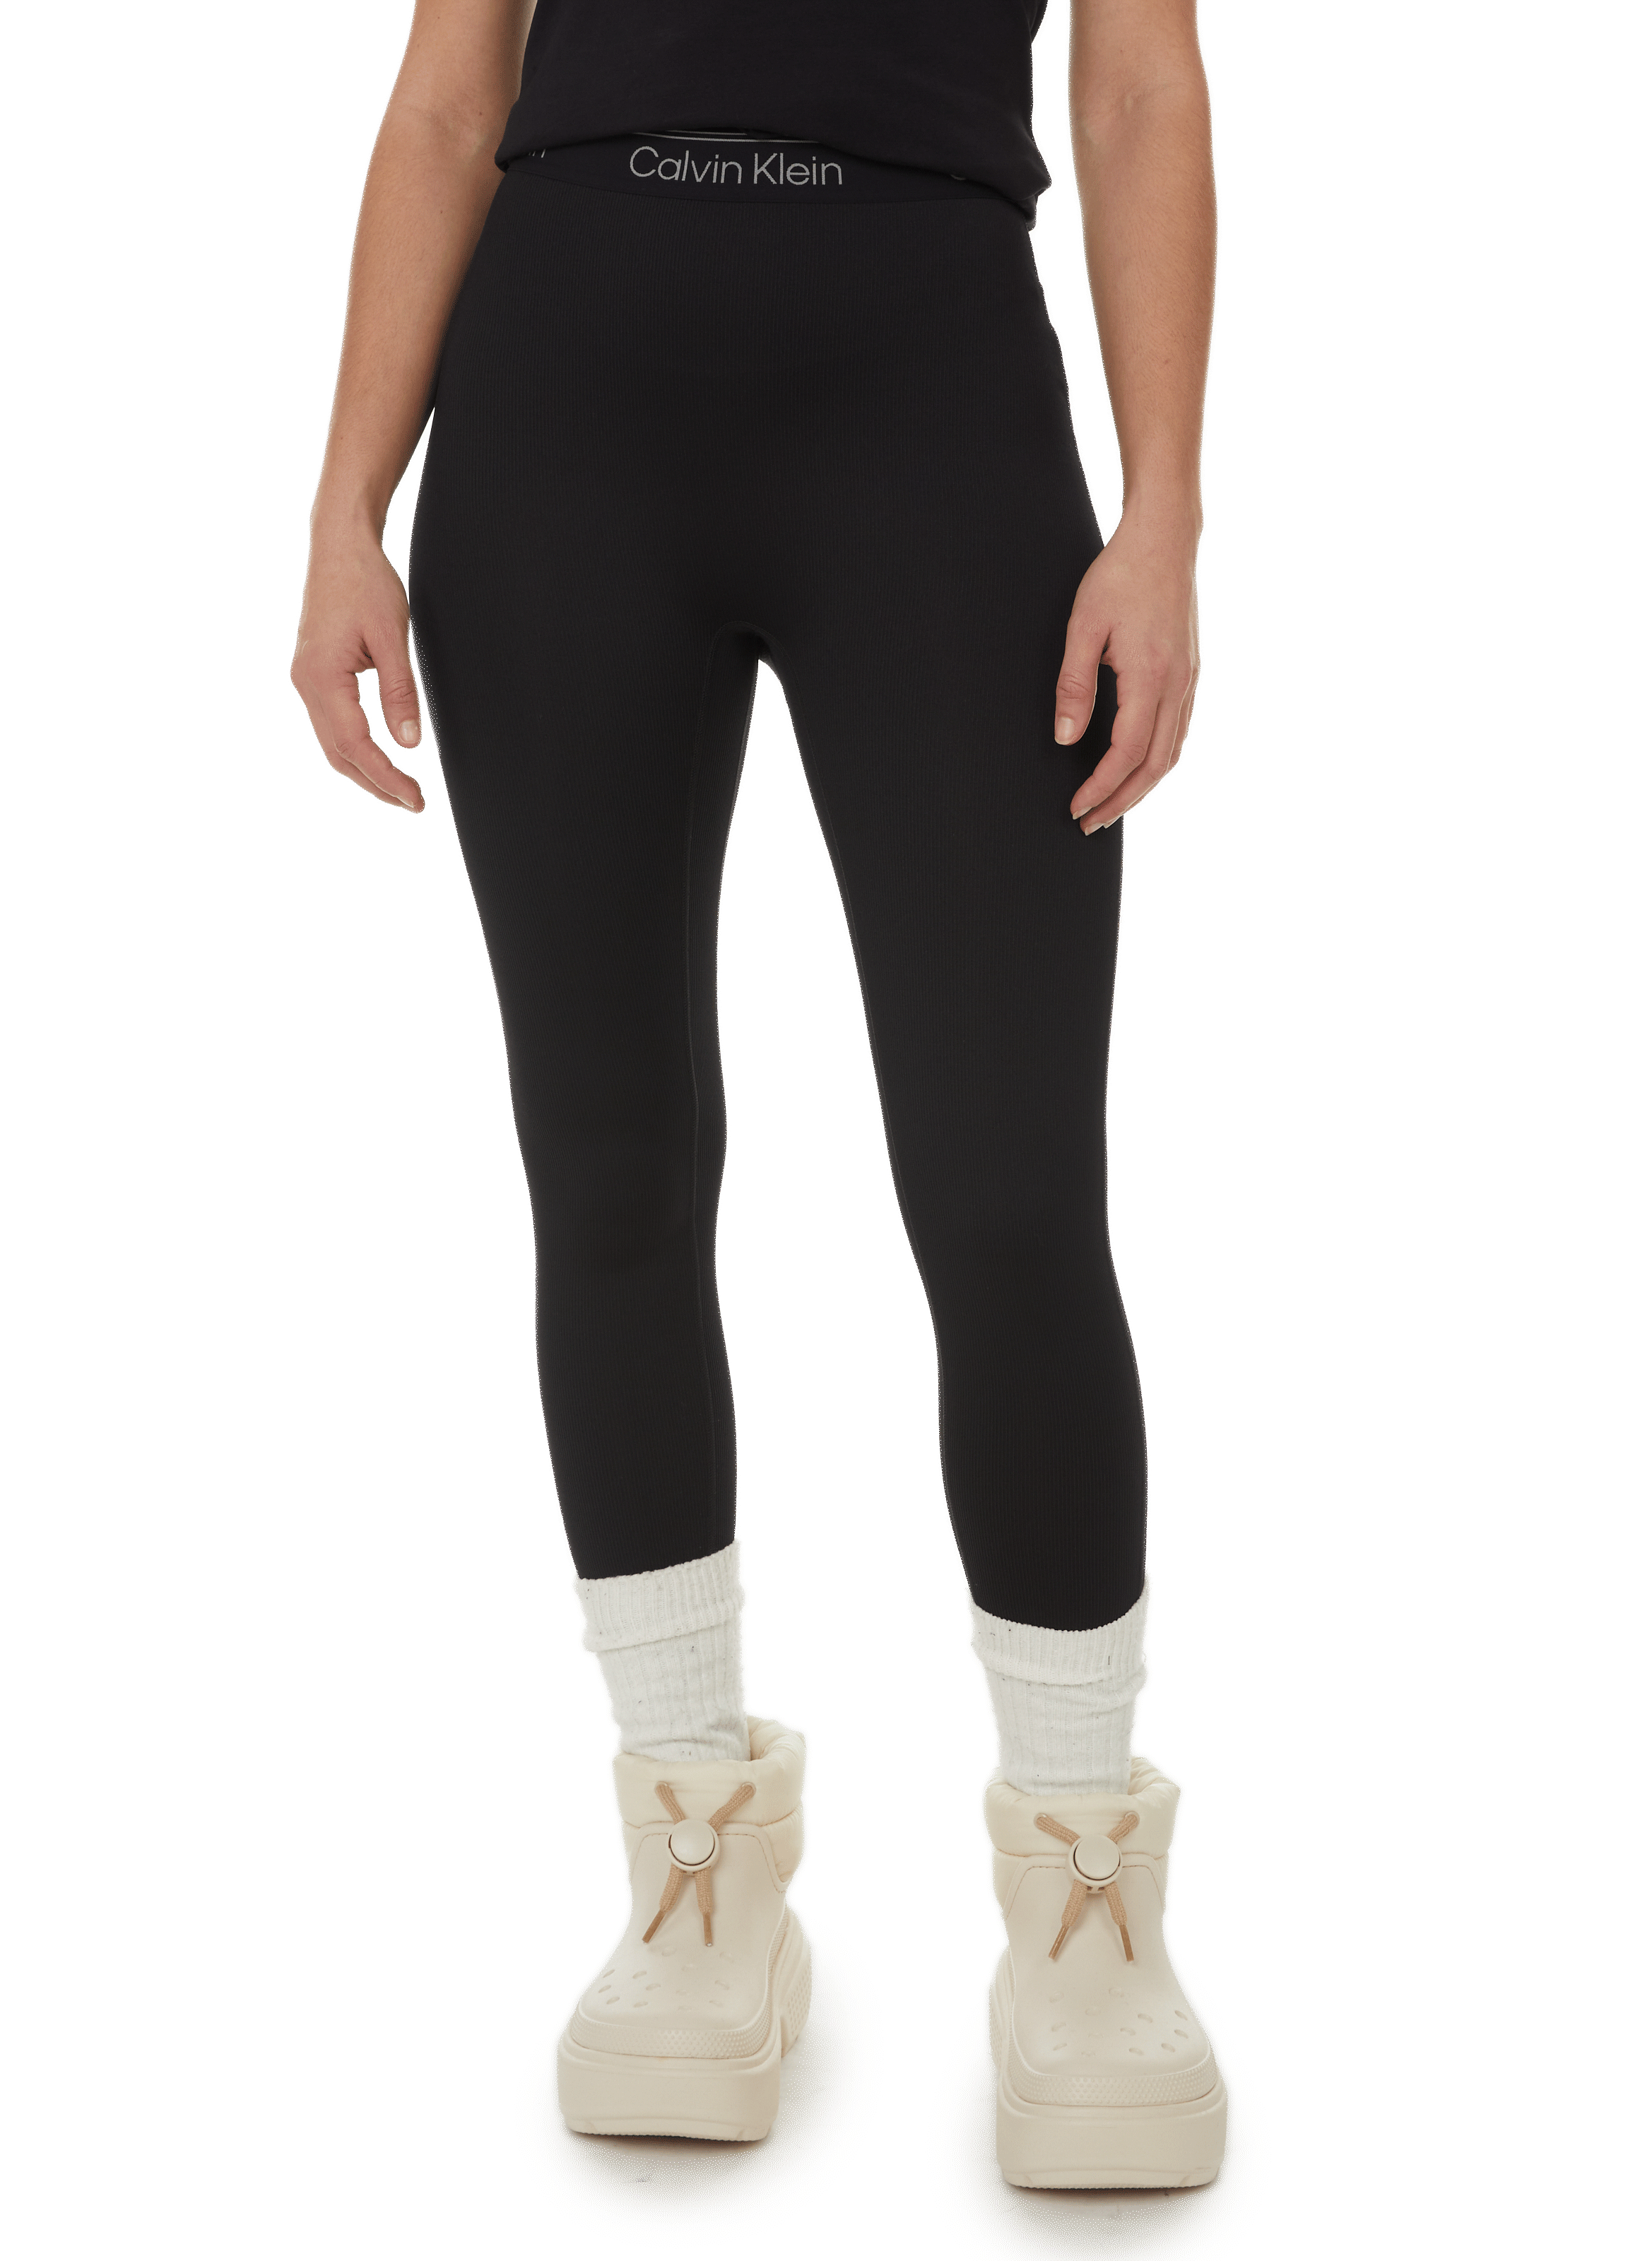 Calvin Klein Women's Slim Fit Glen Plaid Pants Grey Size 16 | StackSocial